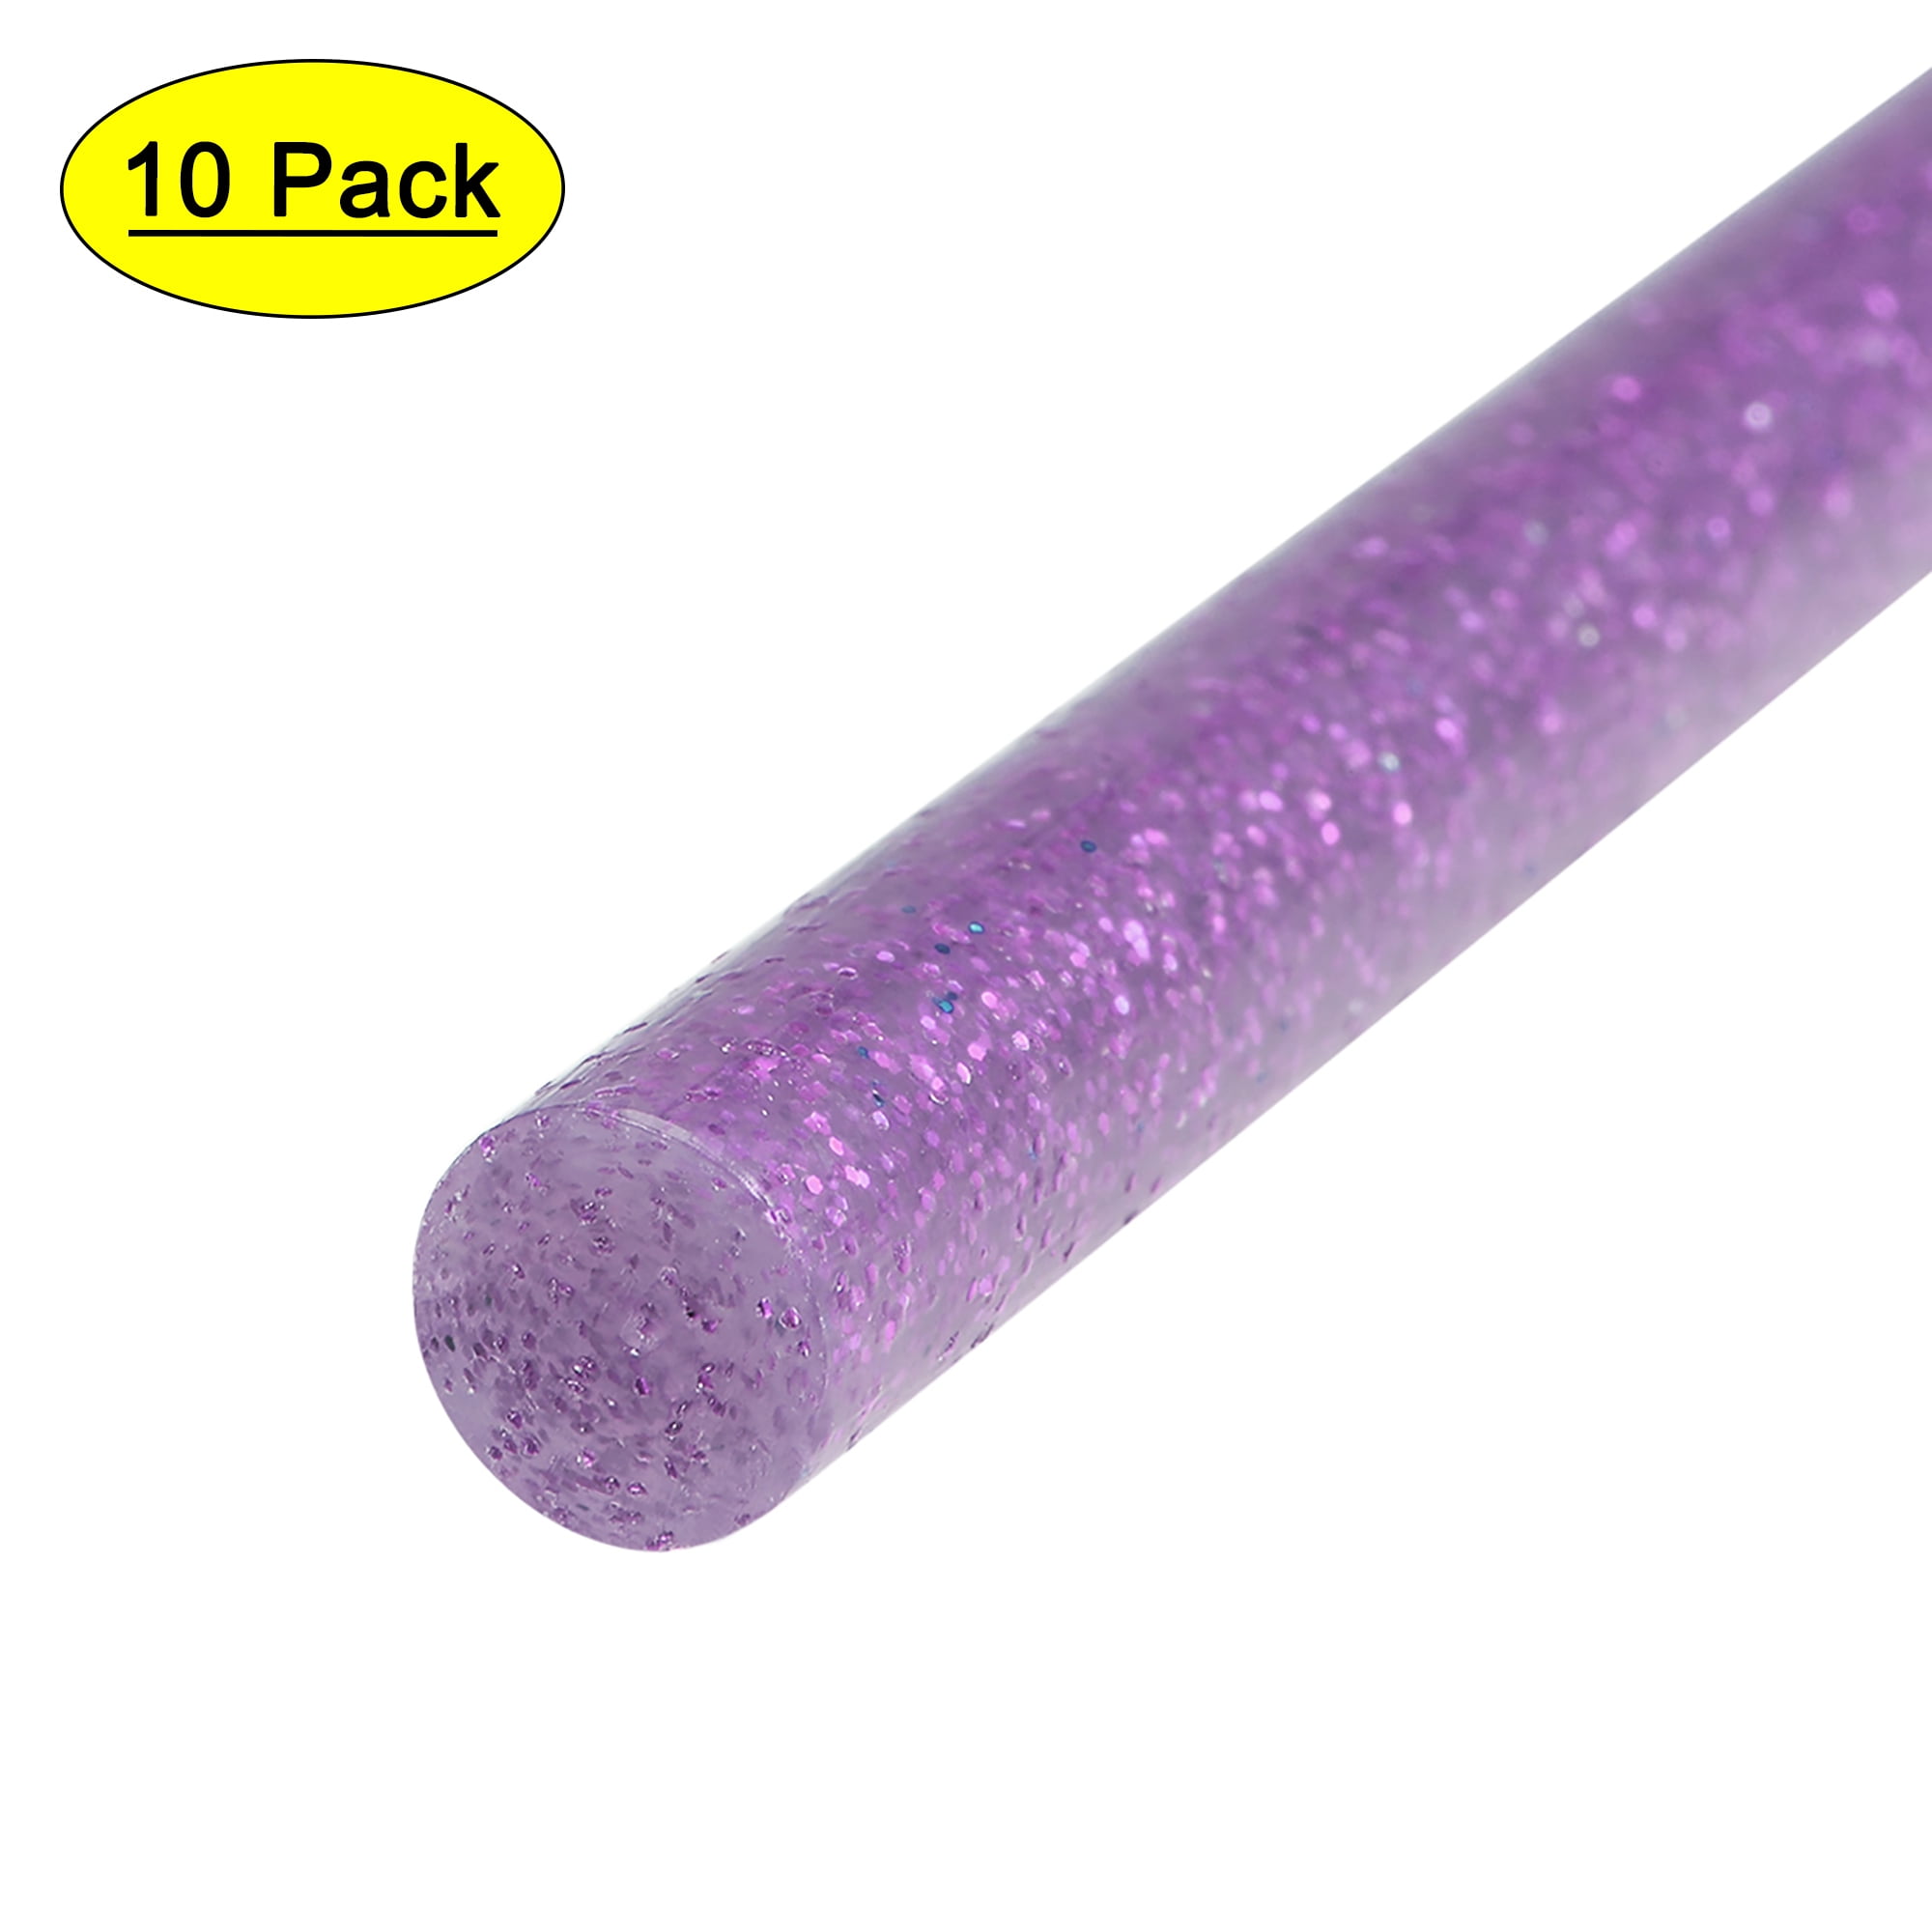 Pro'skit 7mm Hot Glue Stick (10pcs)